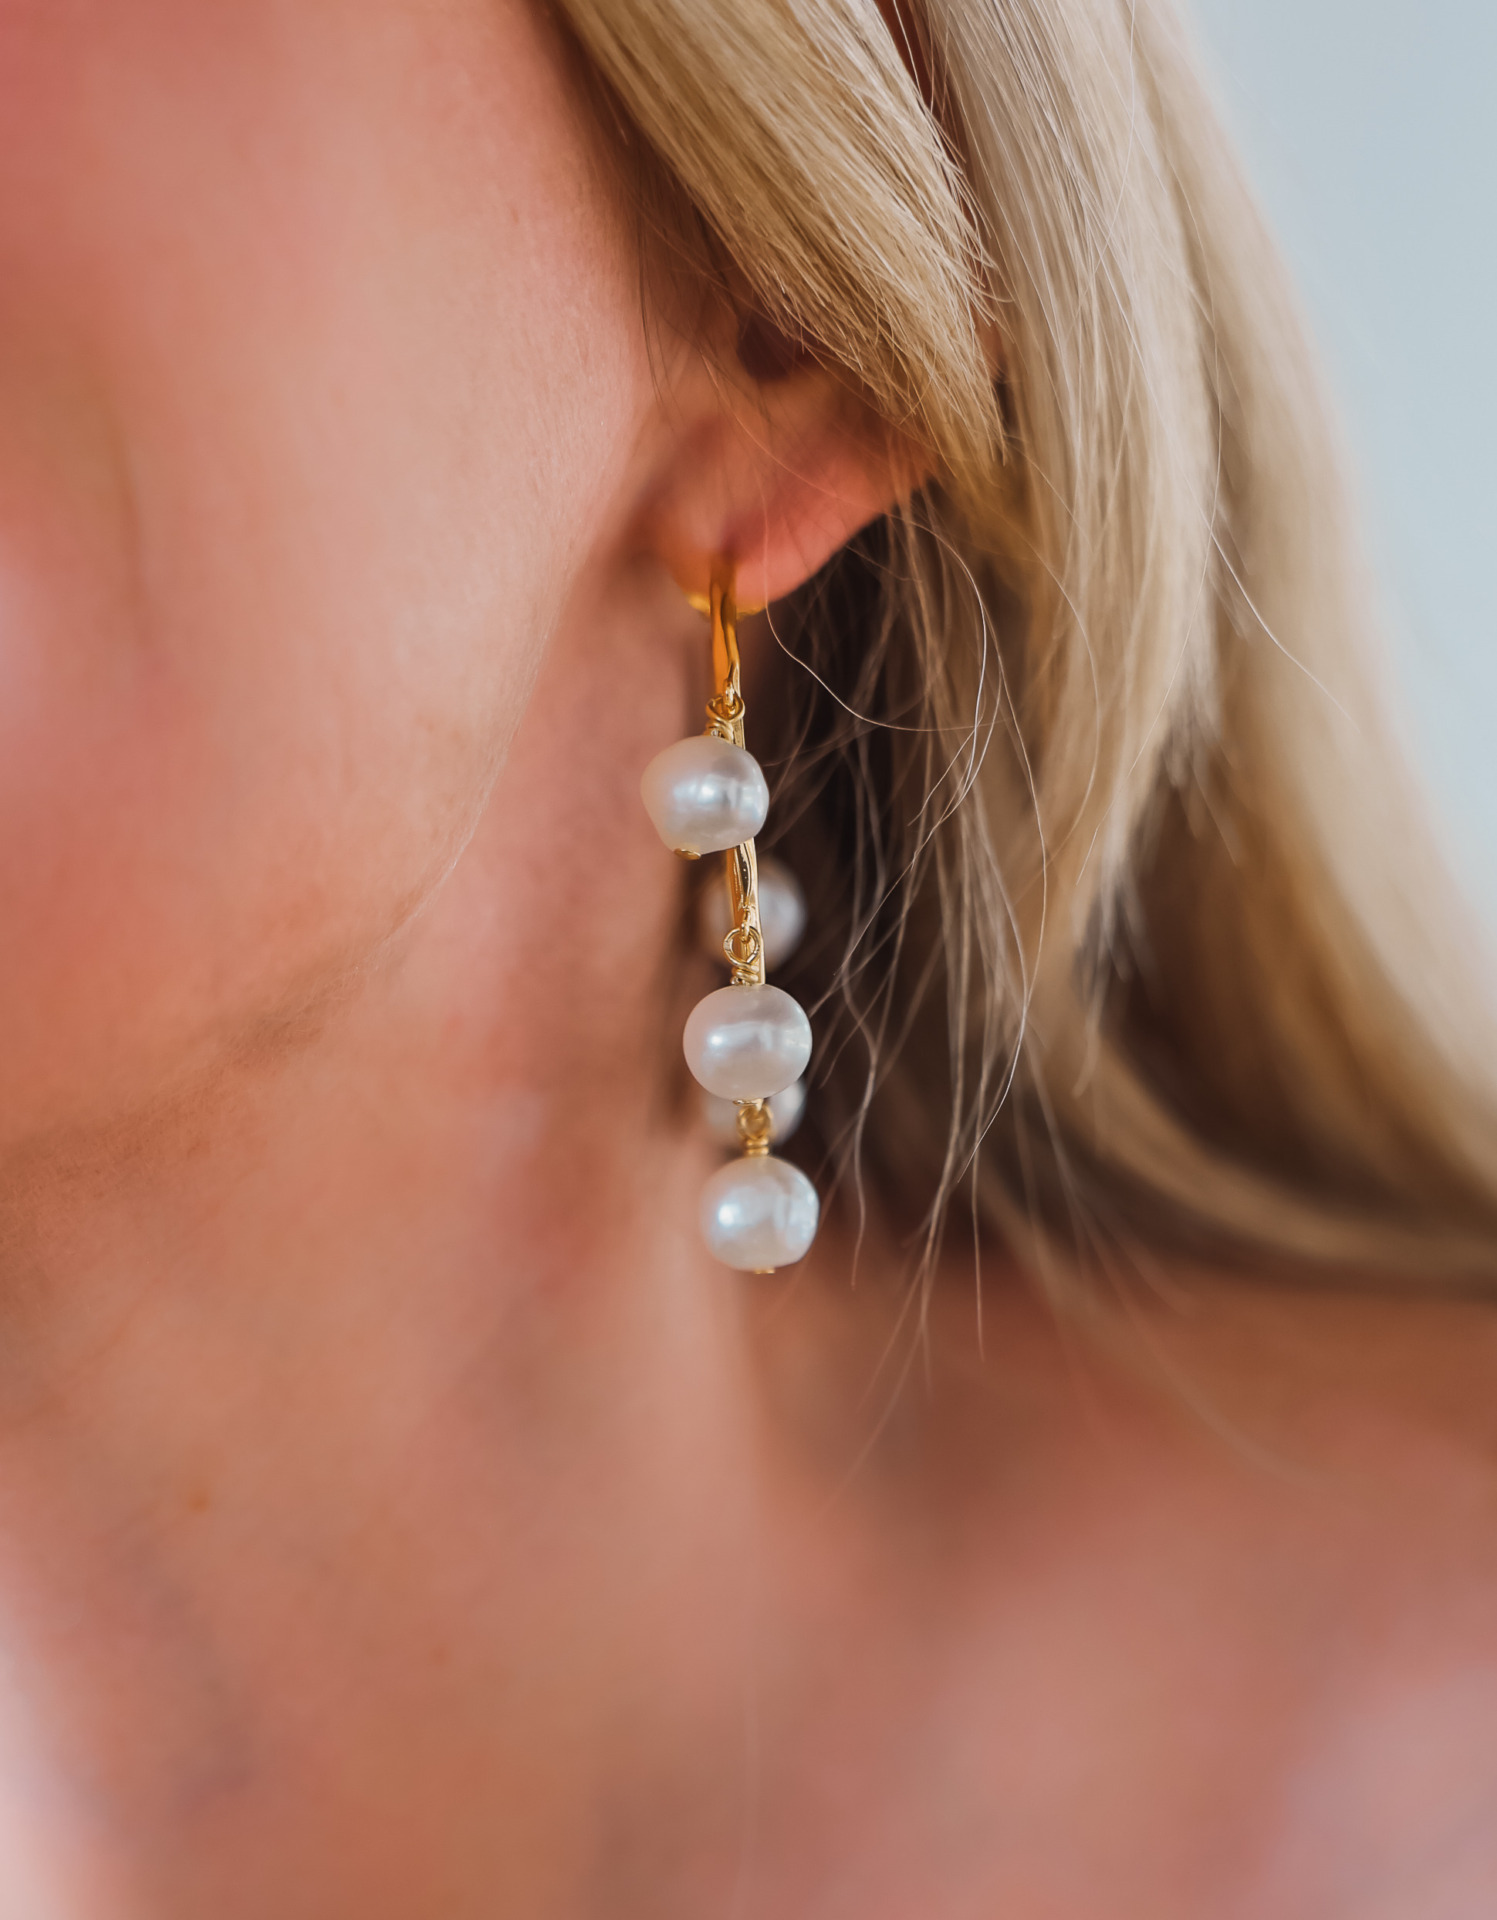 Pearl Earrings | Summer Fashion Accessories